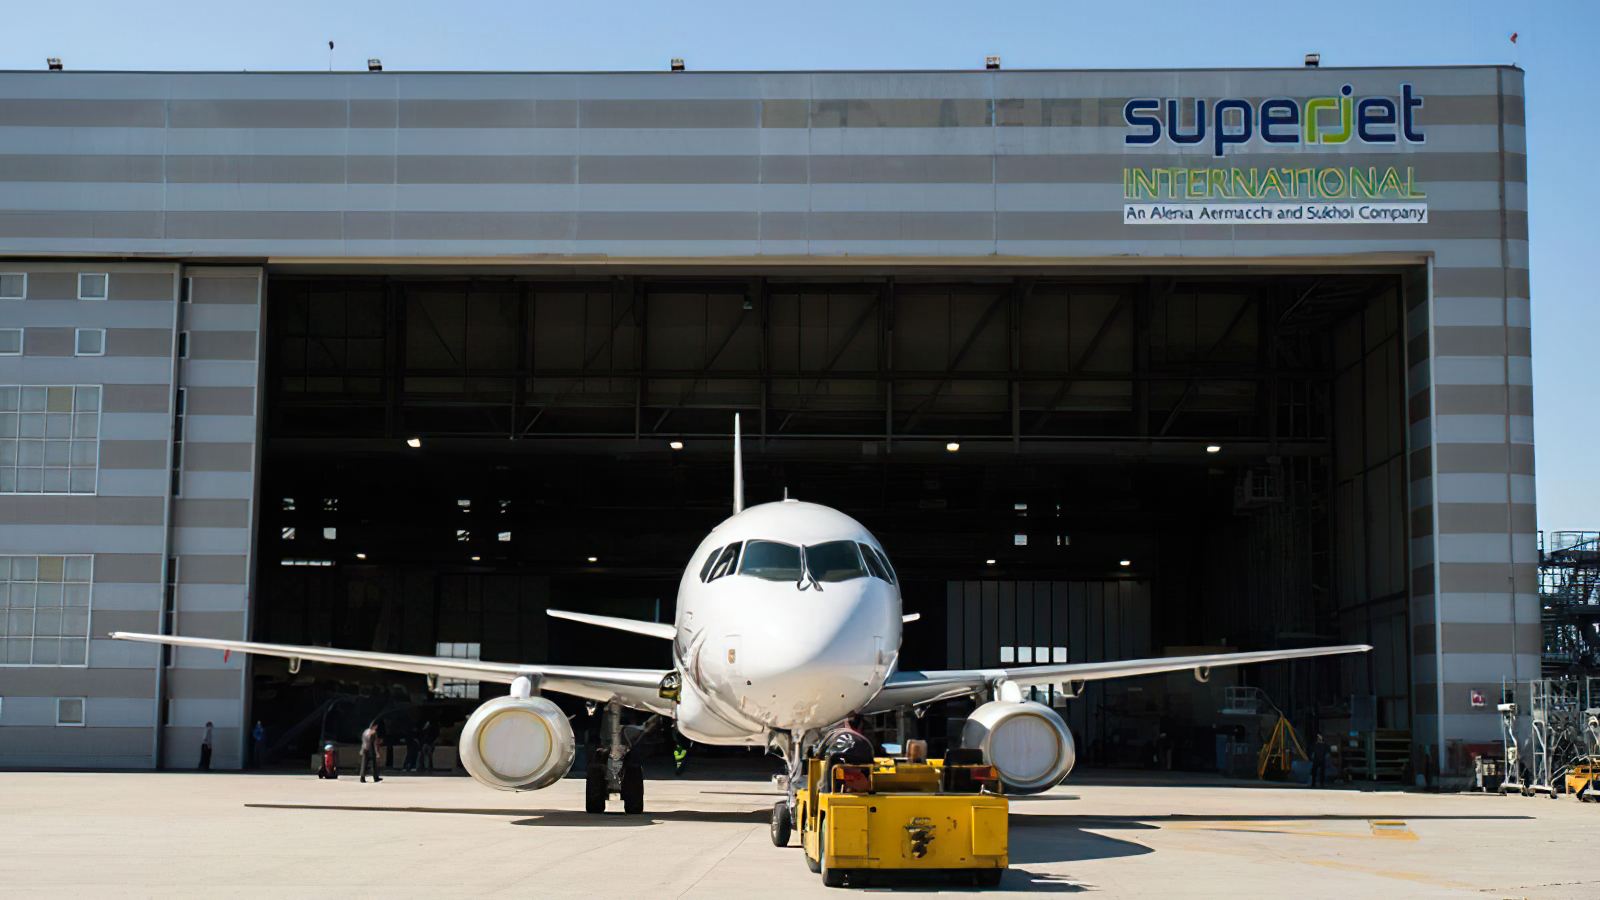  SuperJet International    SSJ100  